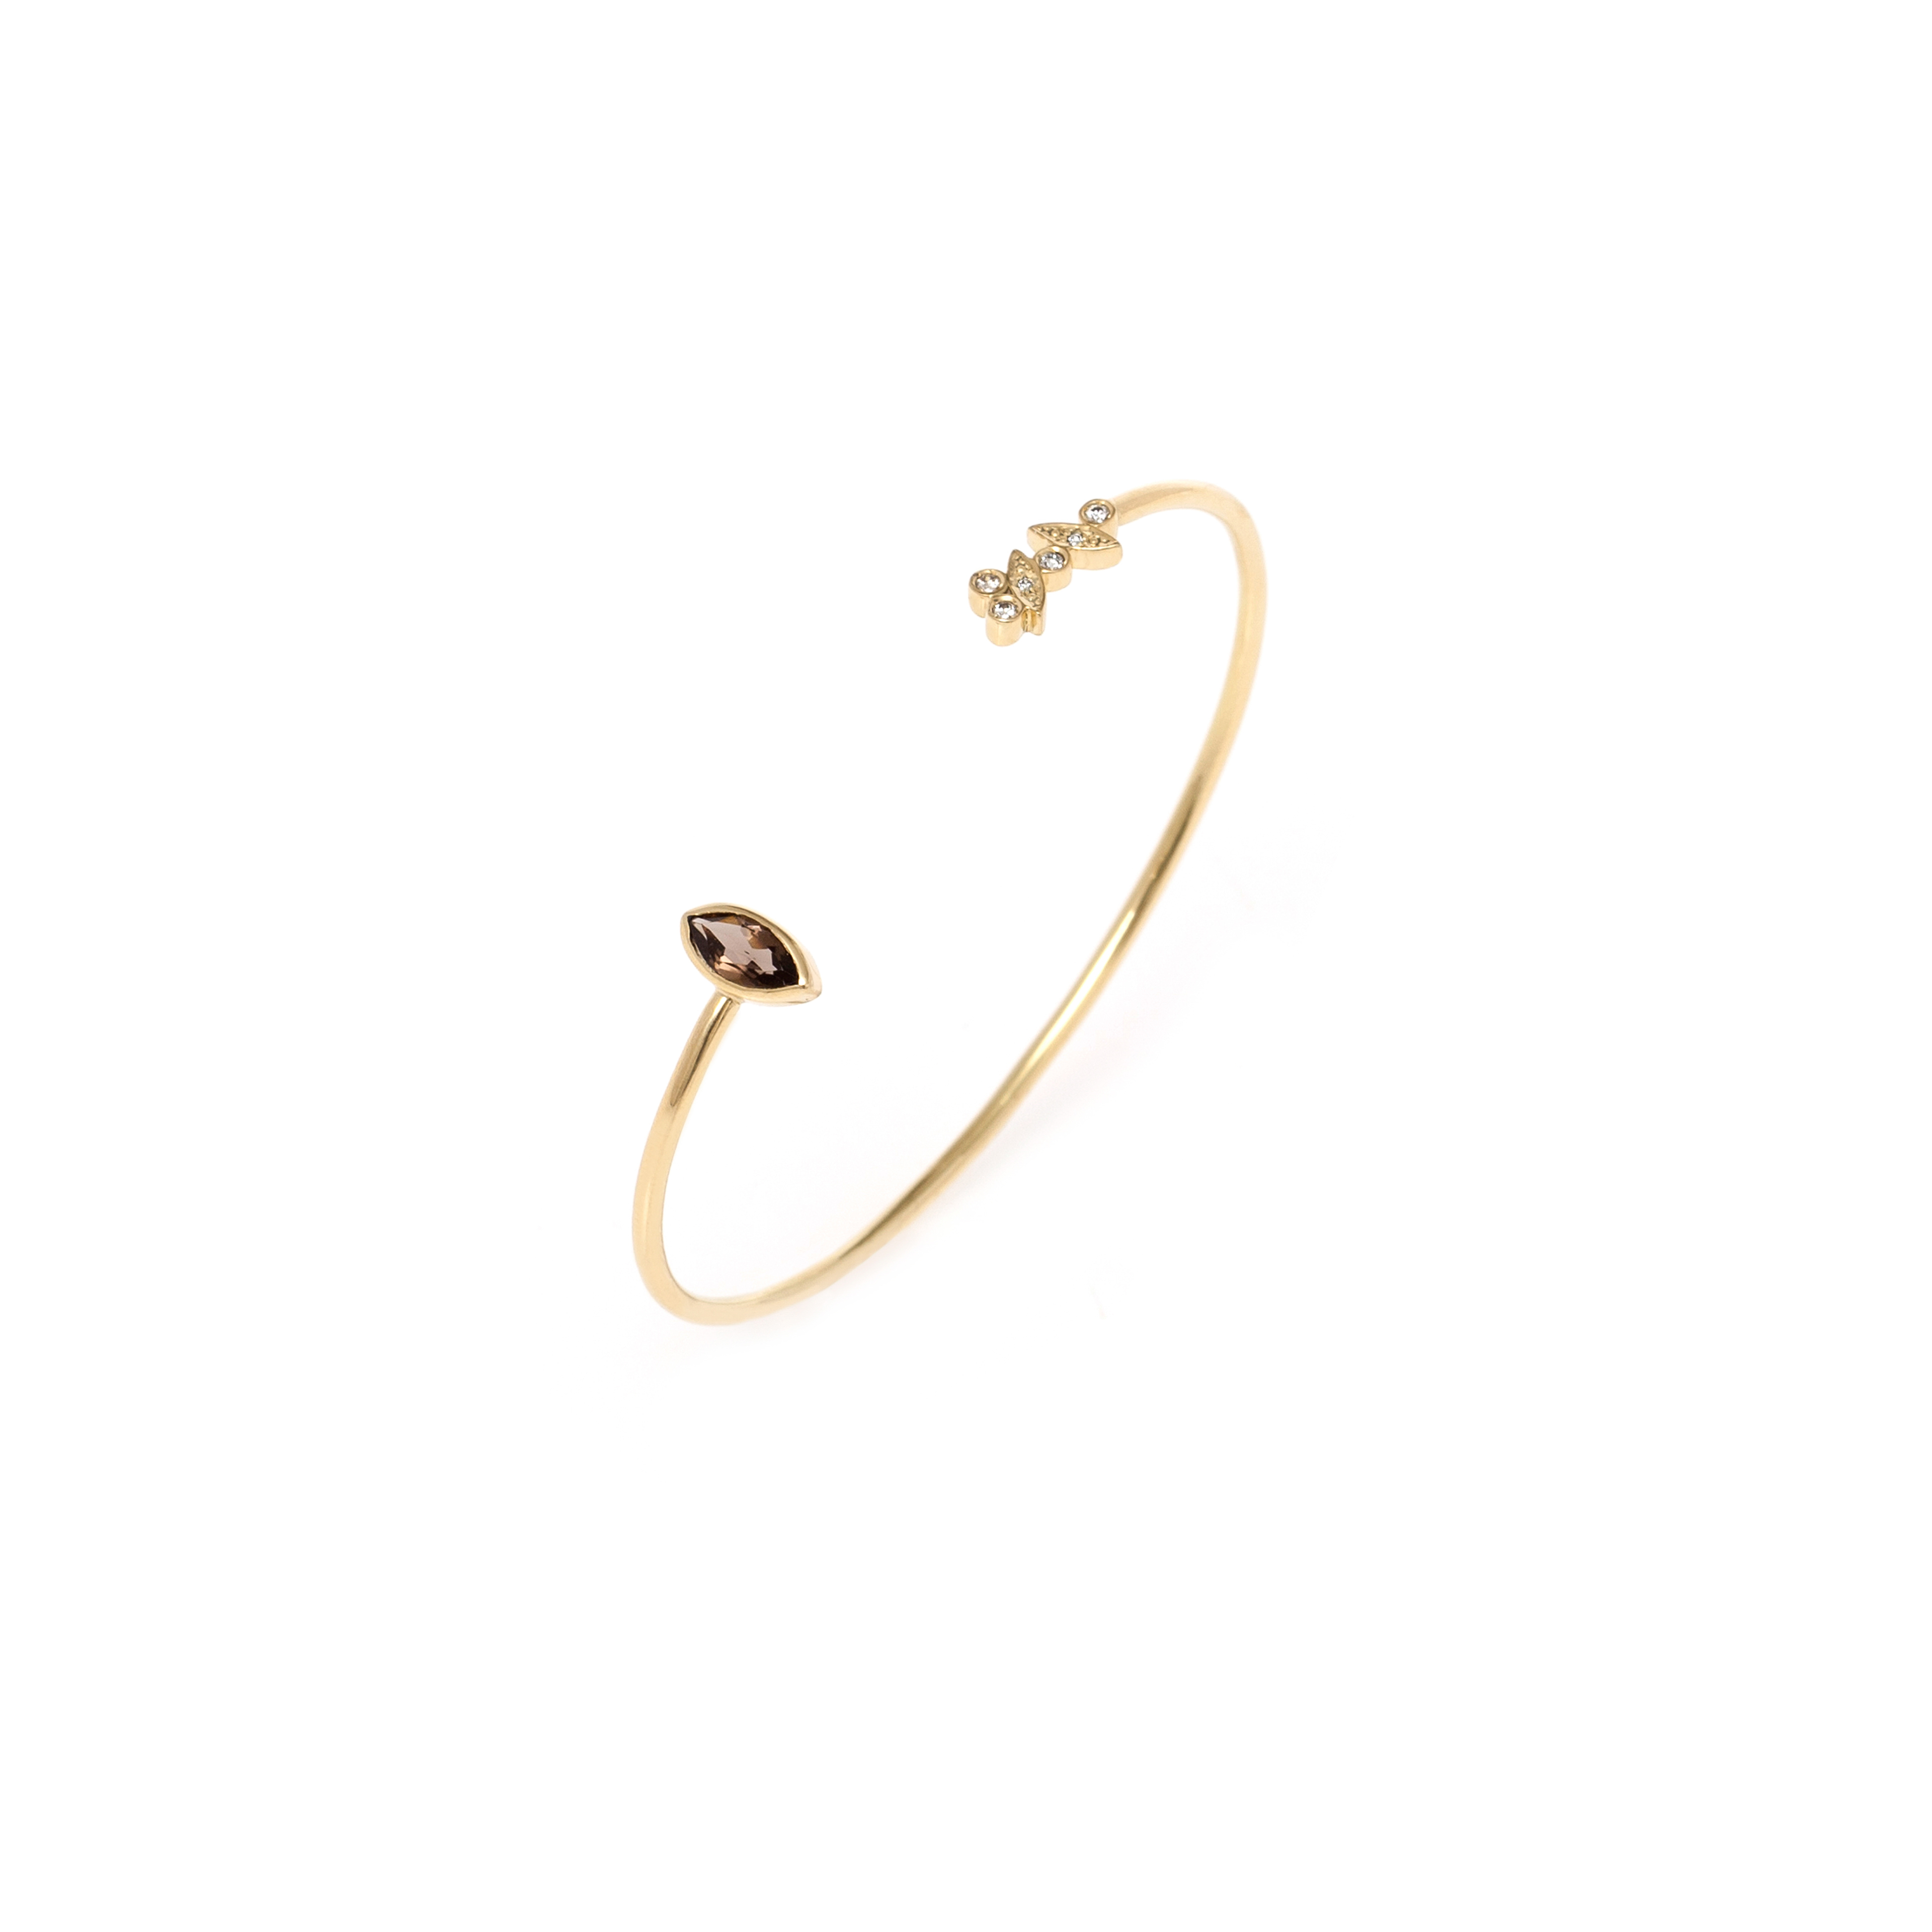 Ana Piazza Jewellery Design - Bracelet